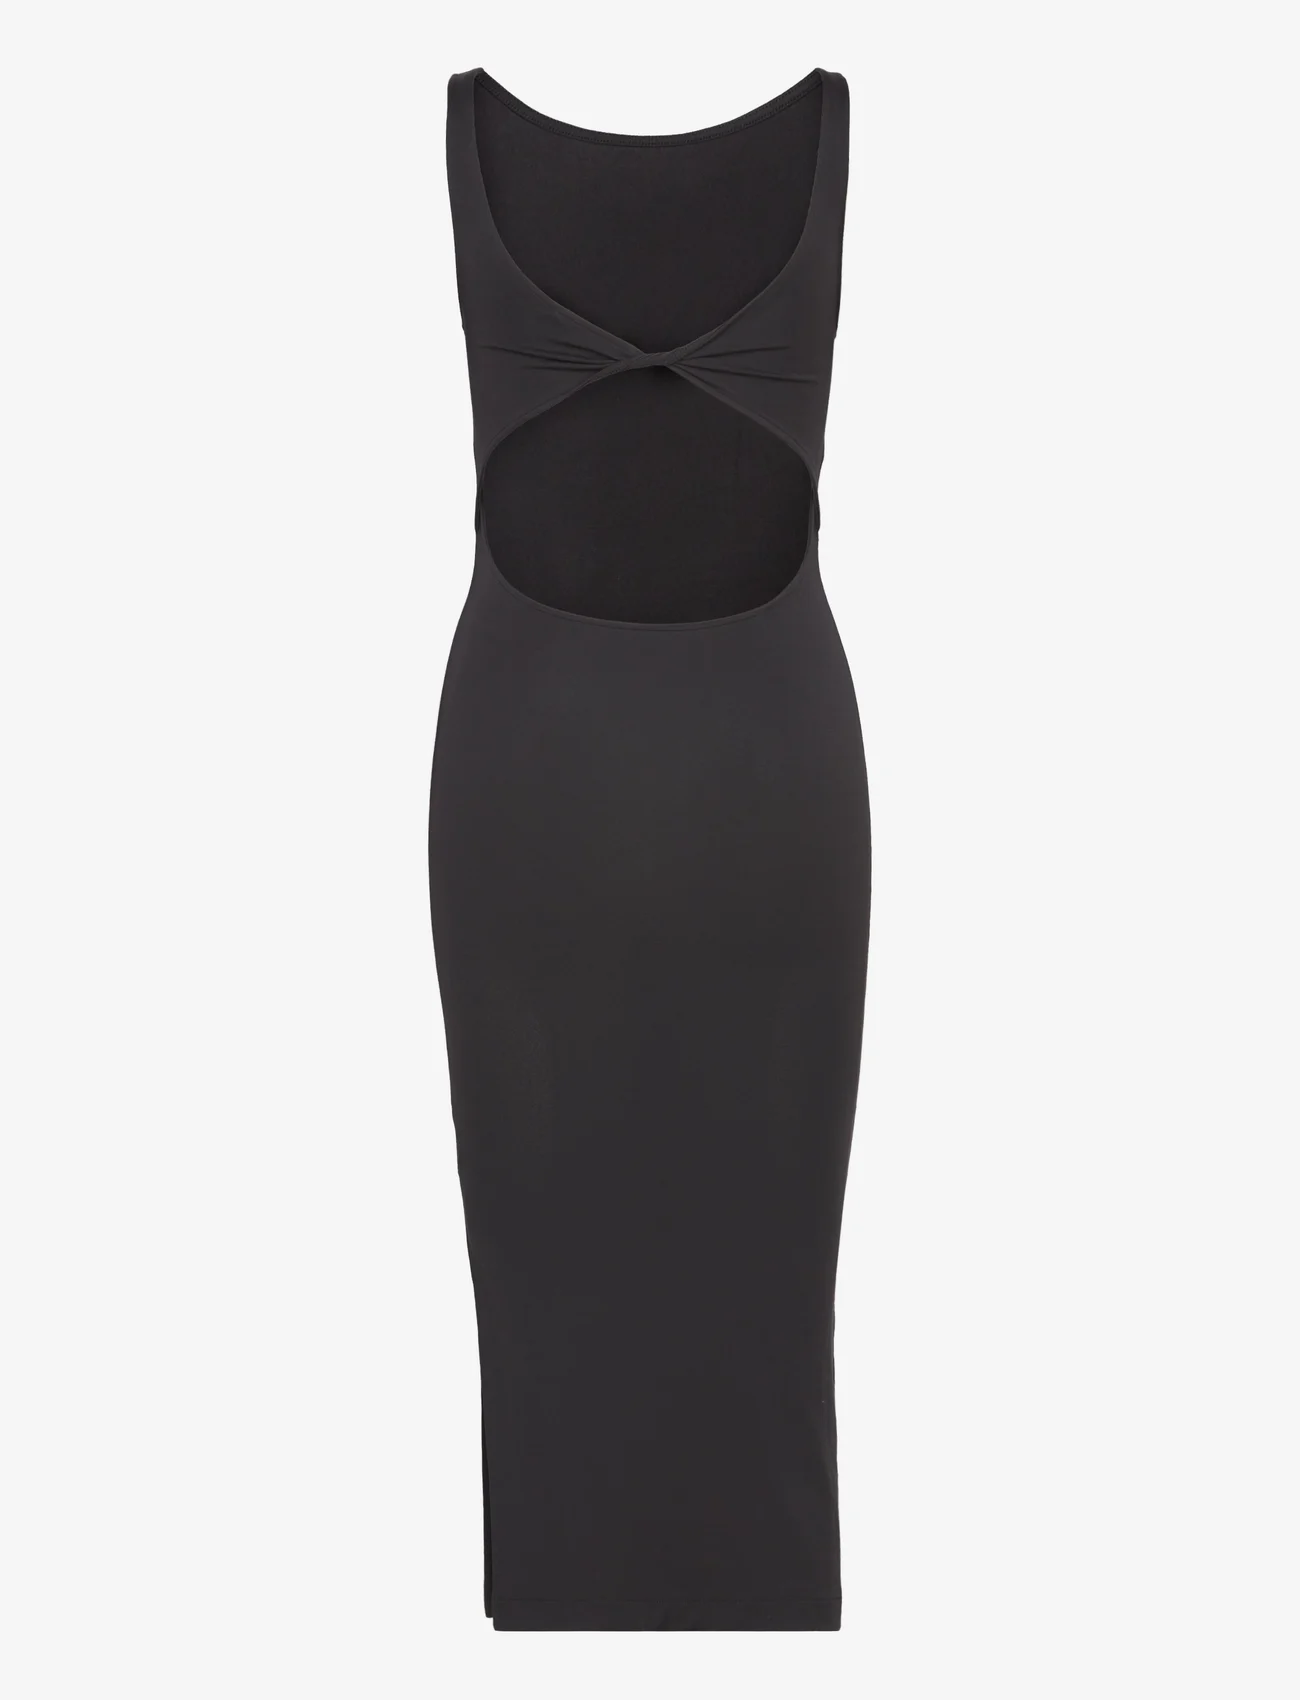 Calvin Klein Jeans - BACK TWIST STRAPPY LONG  DRESS - stramme kjoler - ck black - 1